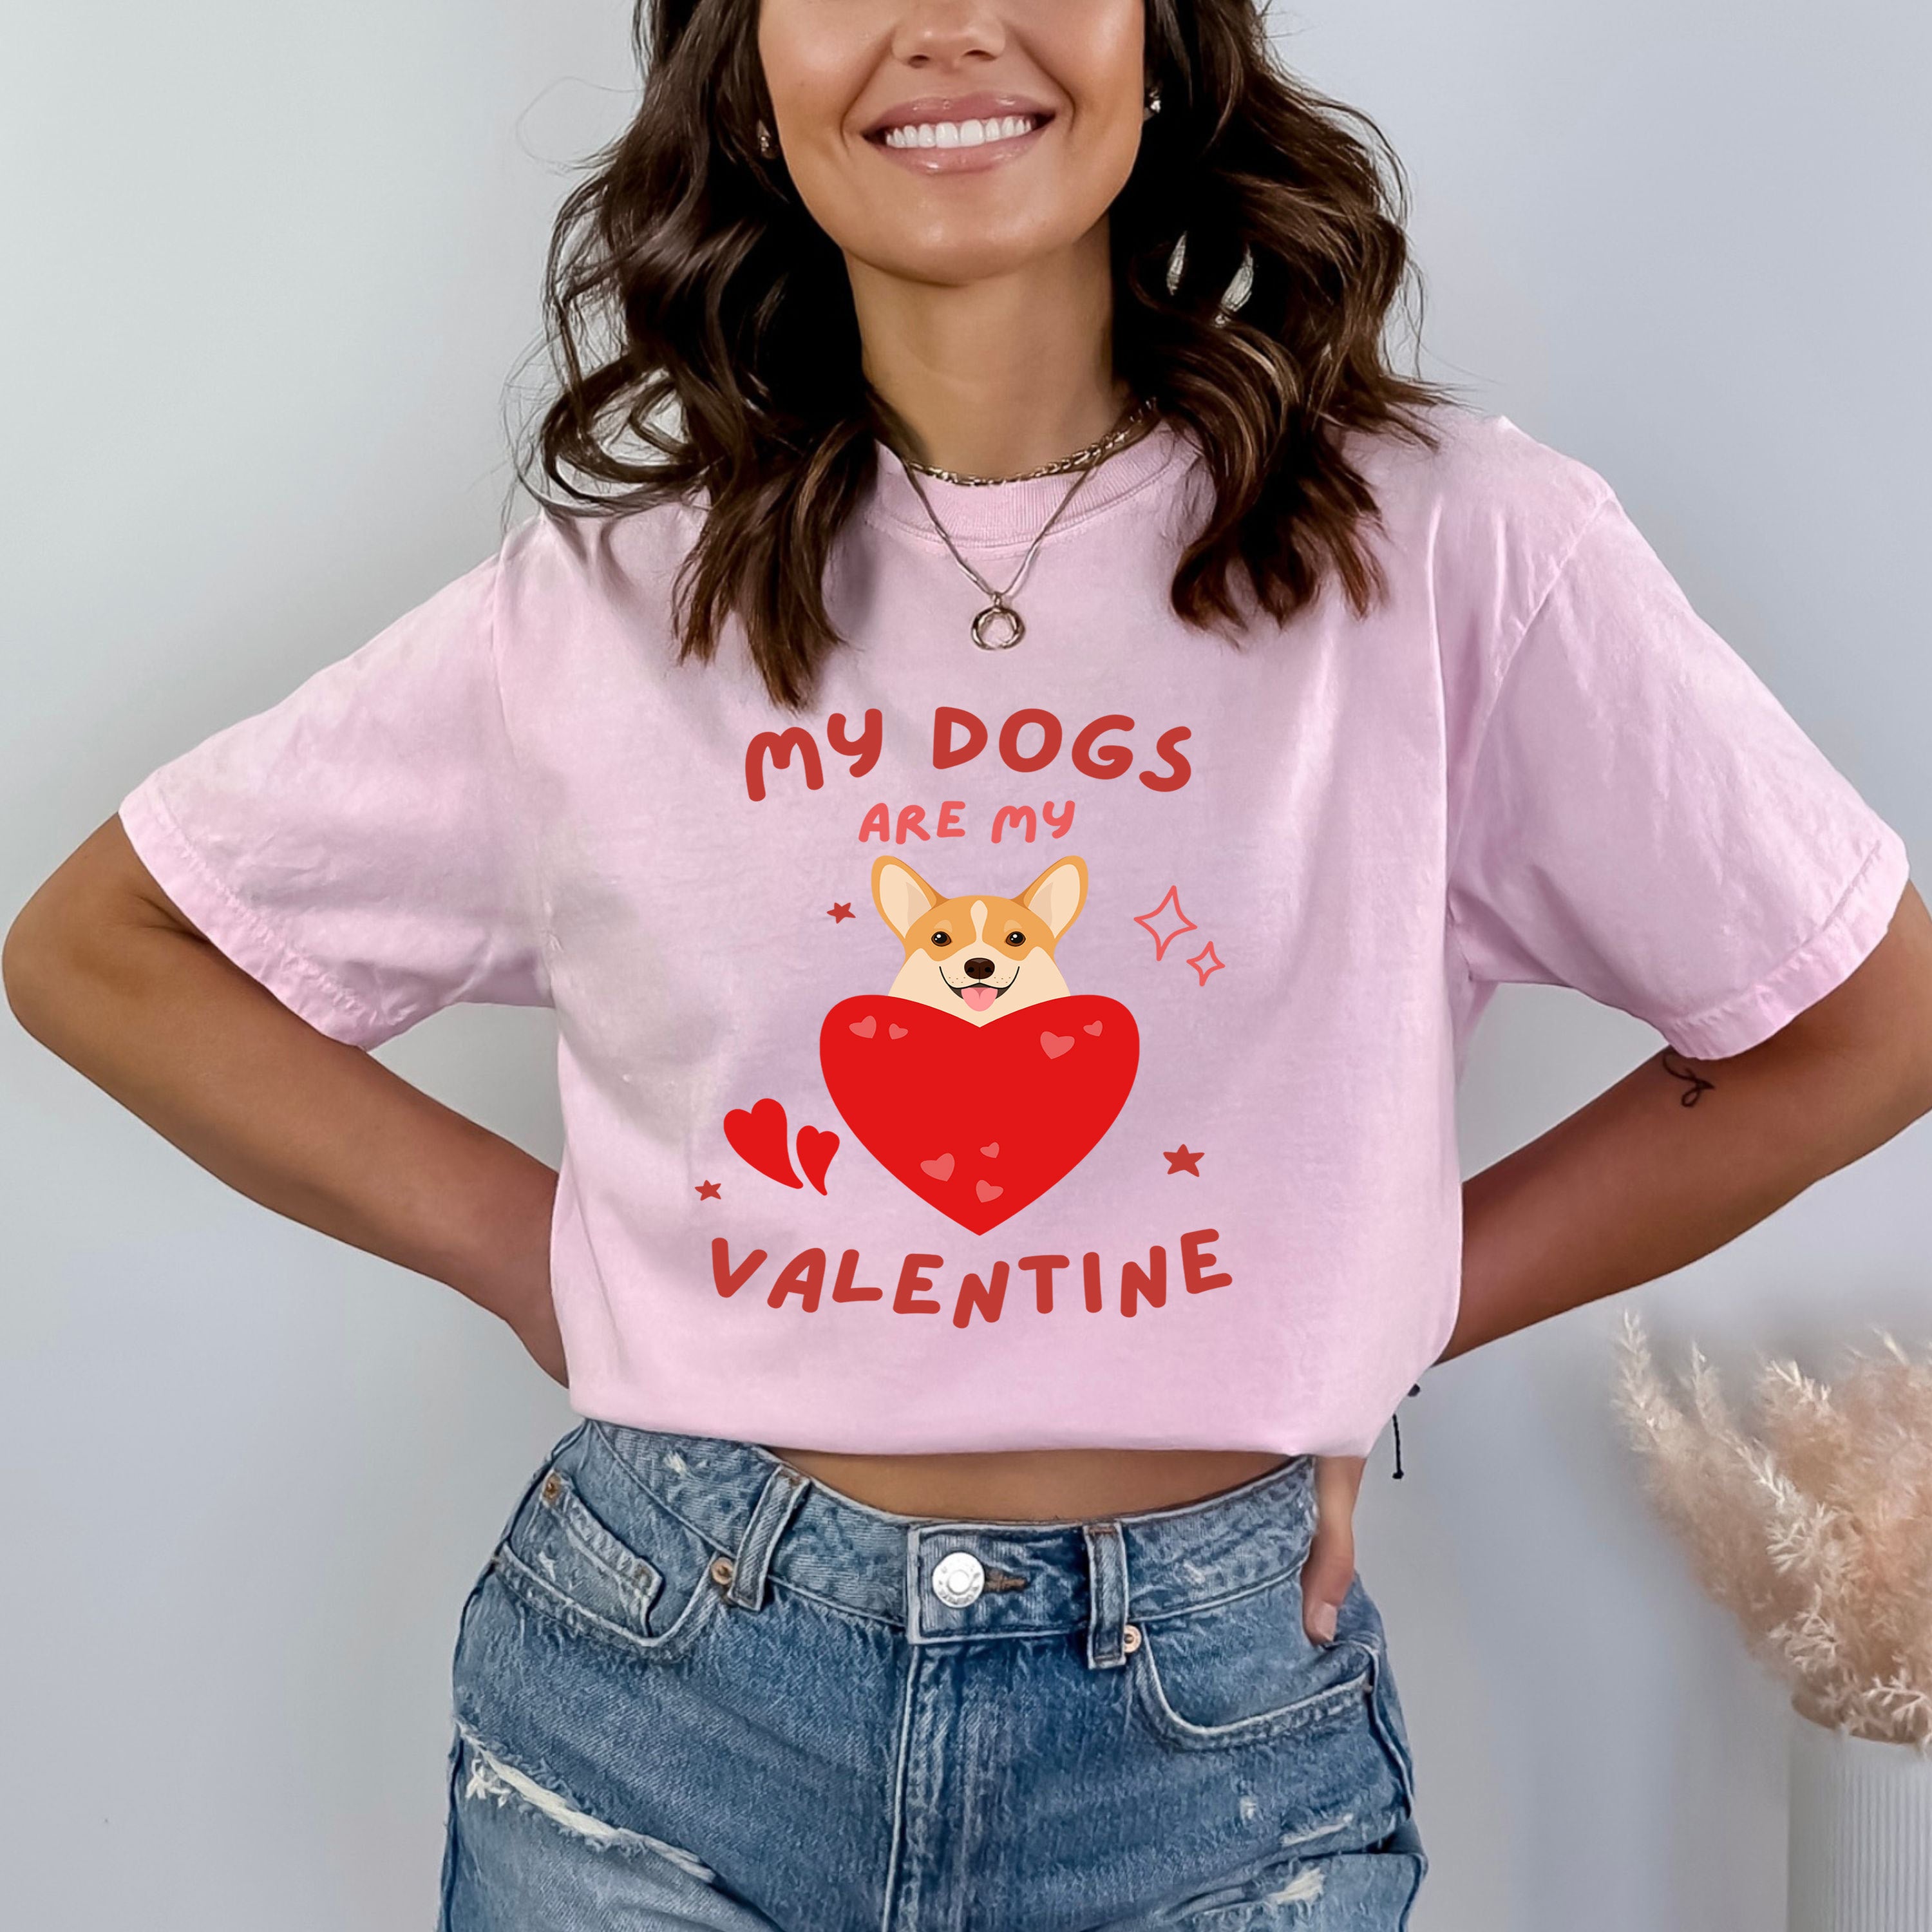 My Dogs Are My Valentine - Bella canvas